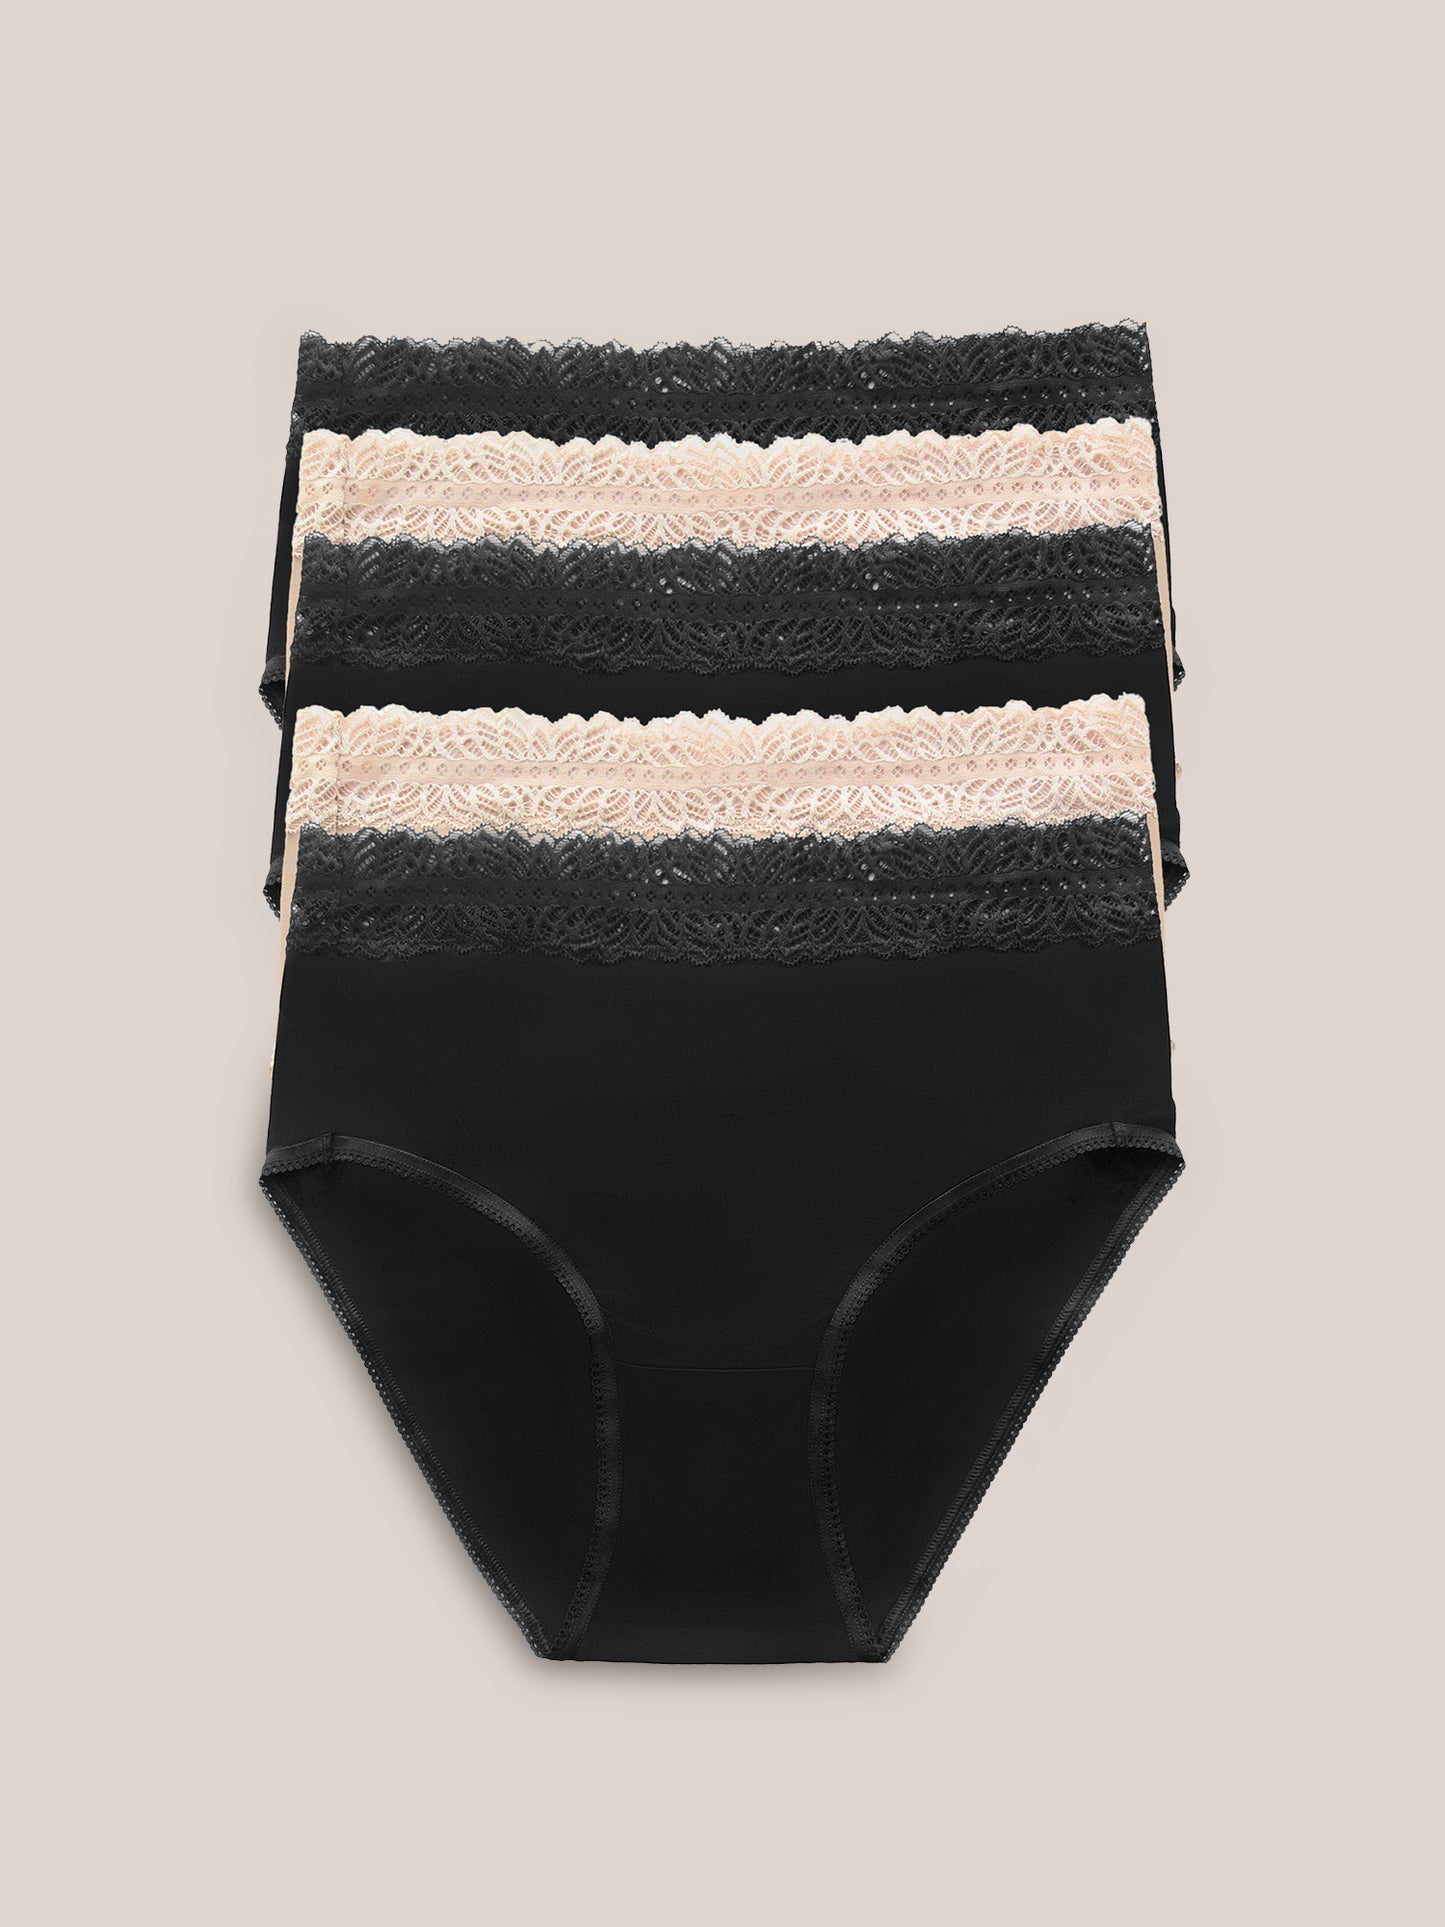 Ladies Pants 10 Postpartum High Waisted Underwear Sport Knickers